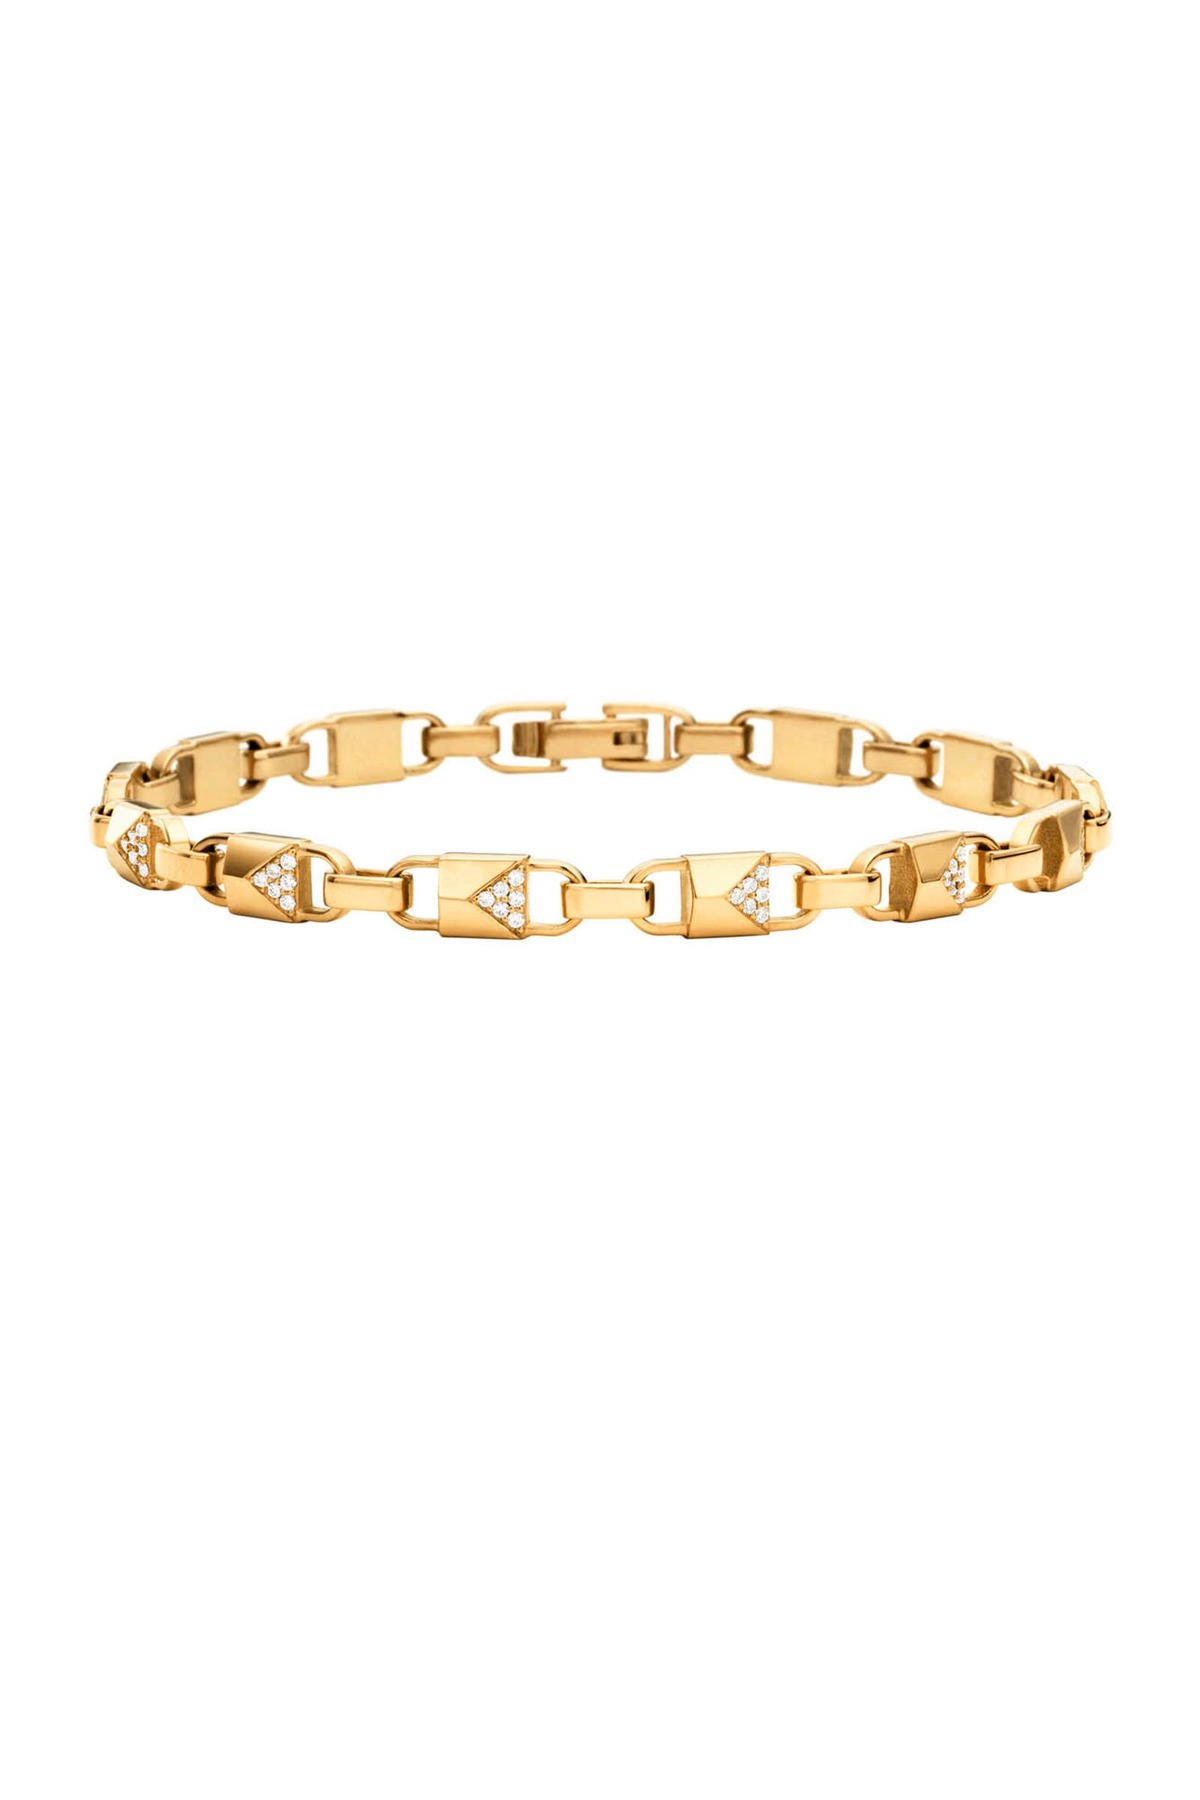 Michael Kors zilveren armband Mercer Link goudkleurig - MKC1004AN710 wehkamp